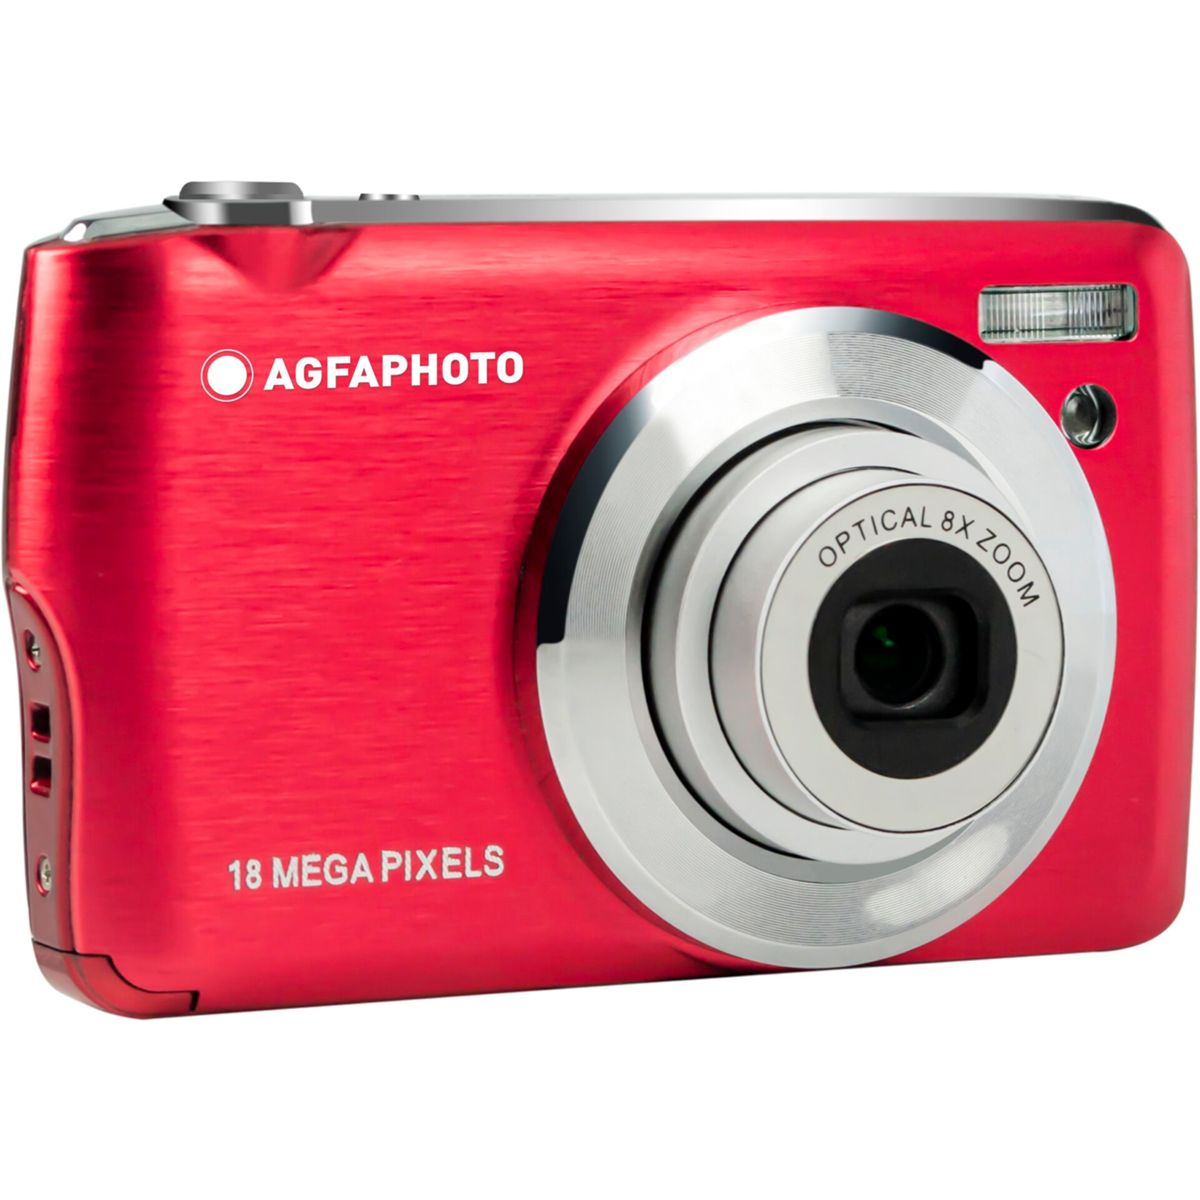 AGFAPHOTO Digitalkamera DC8200 Realishot rot rot-